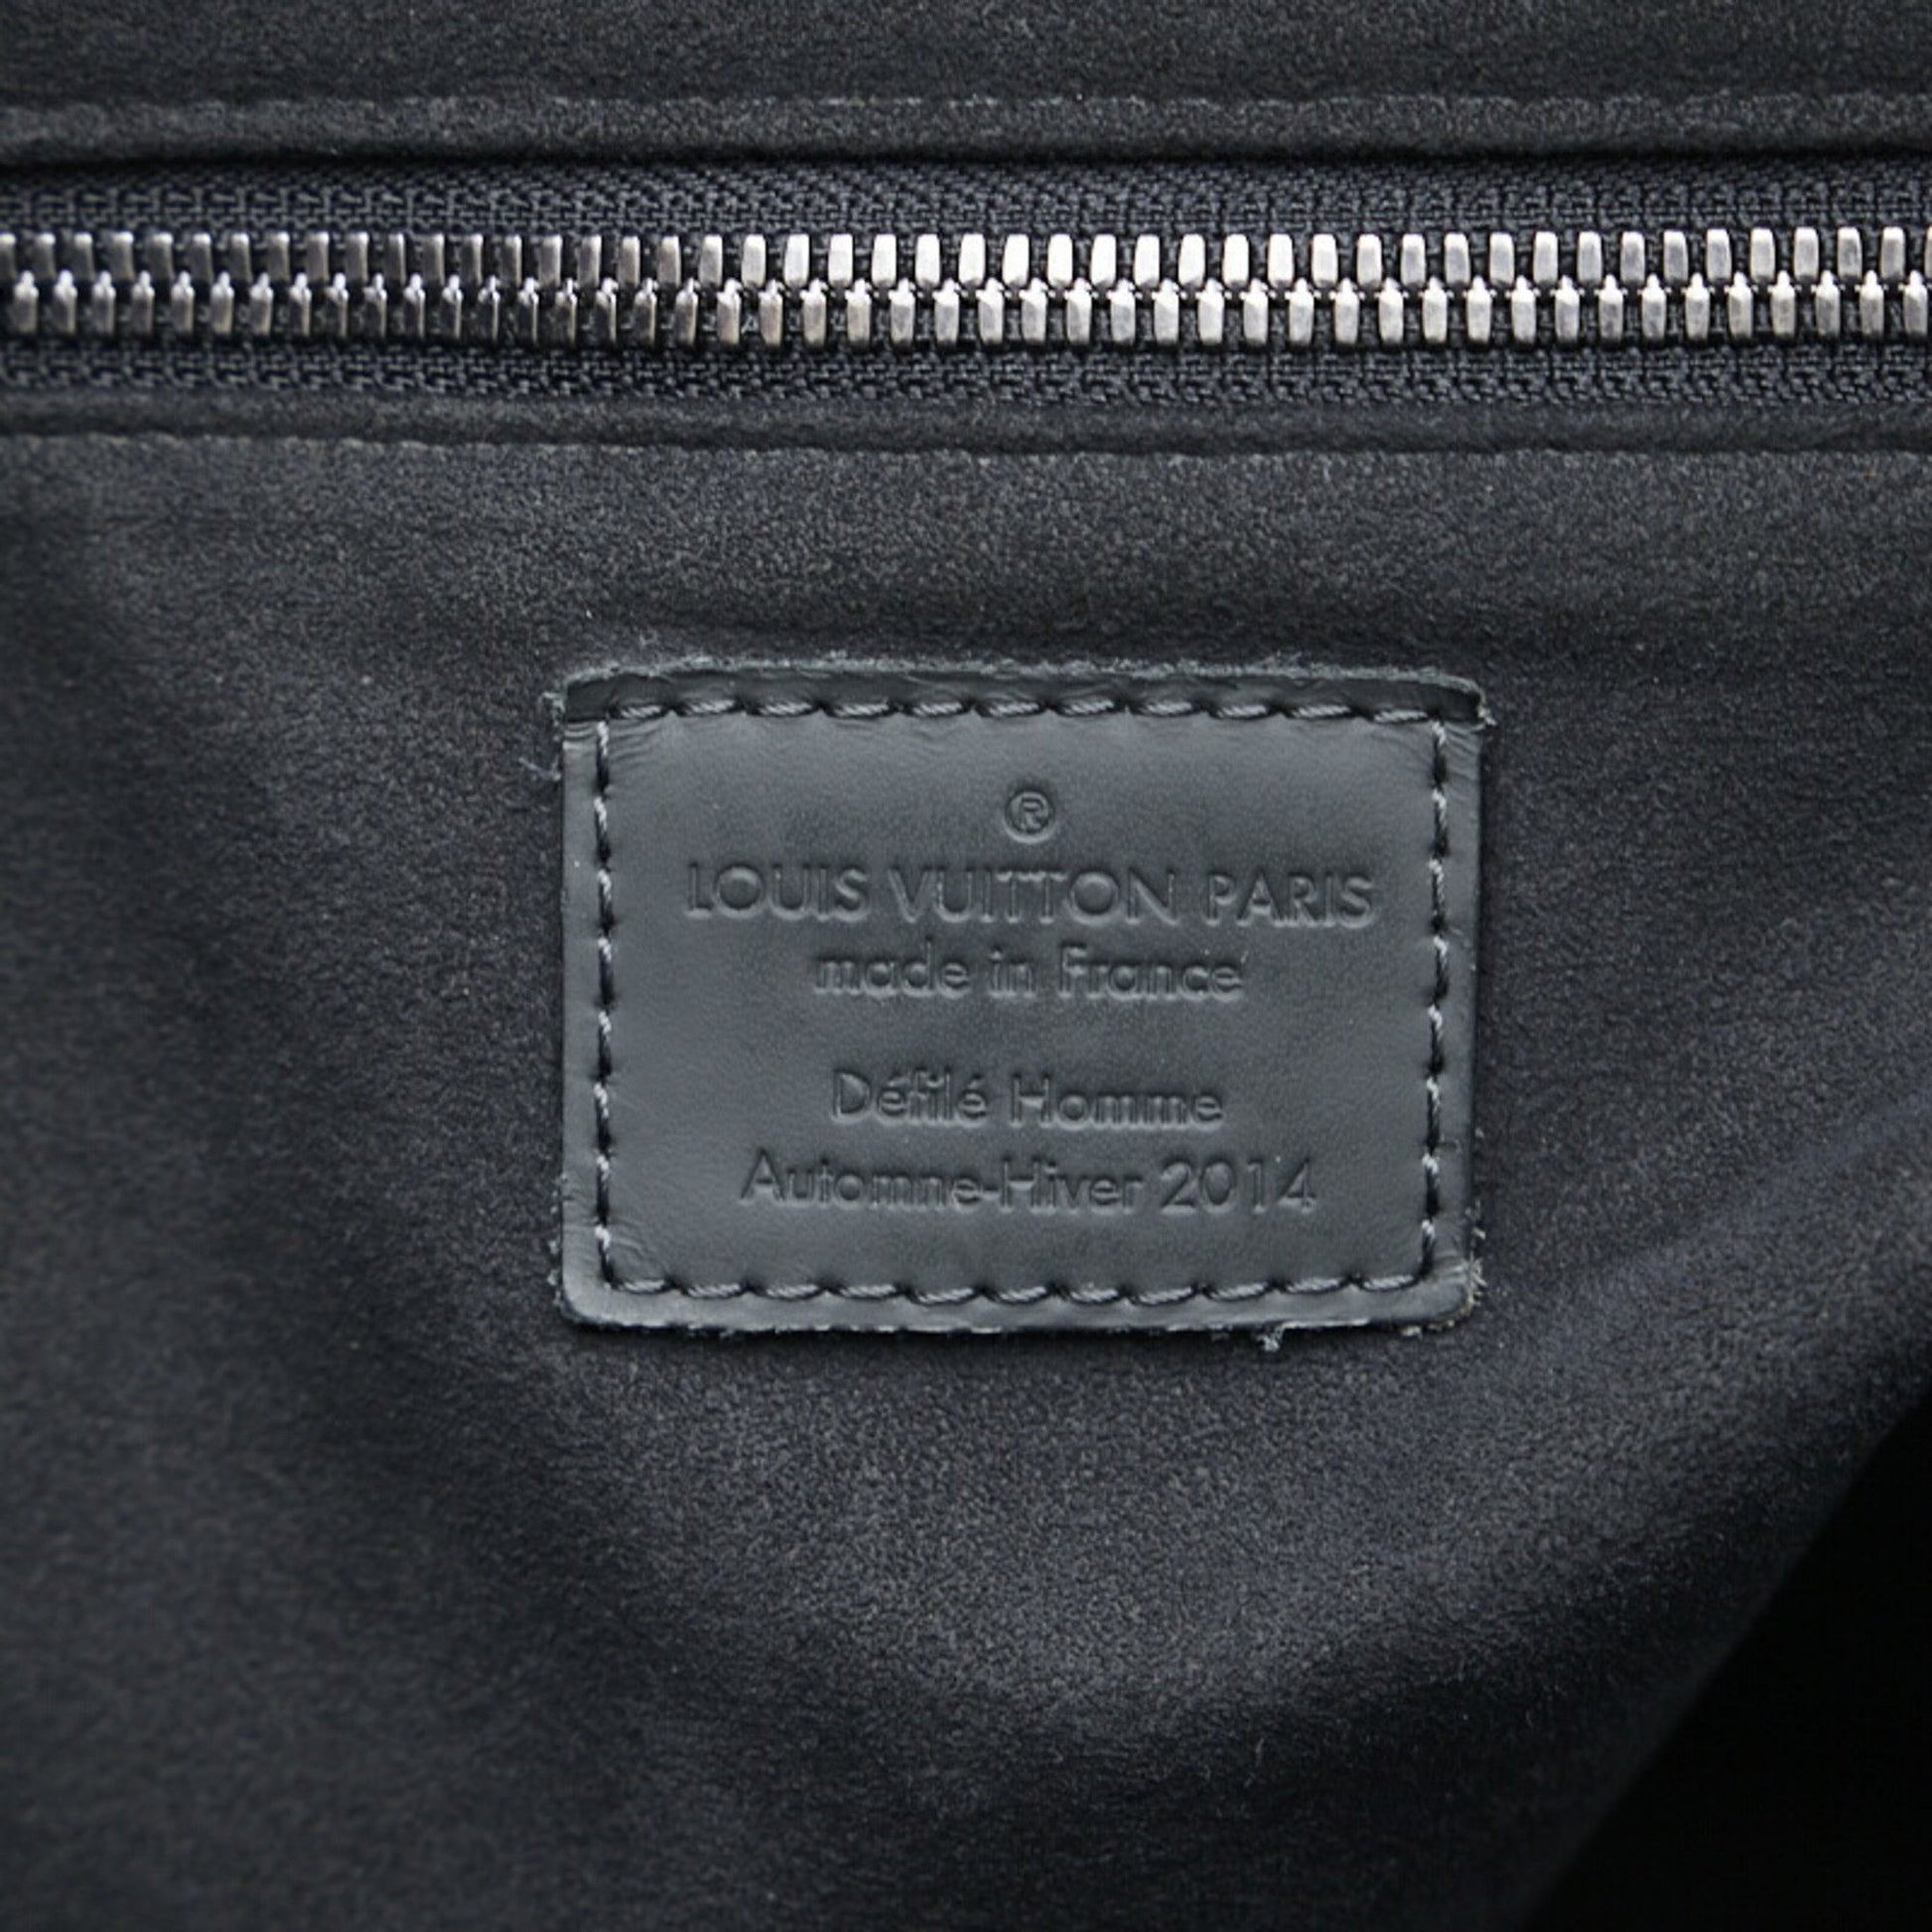 Louis Vuitton Damier Cobalt Tote NS Handbag Shoulder Bag N51100